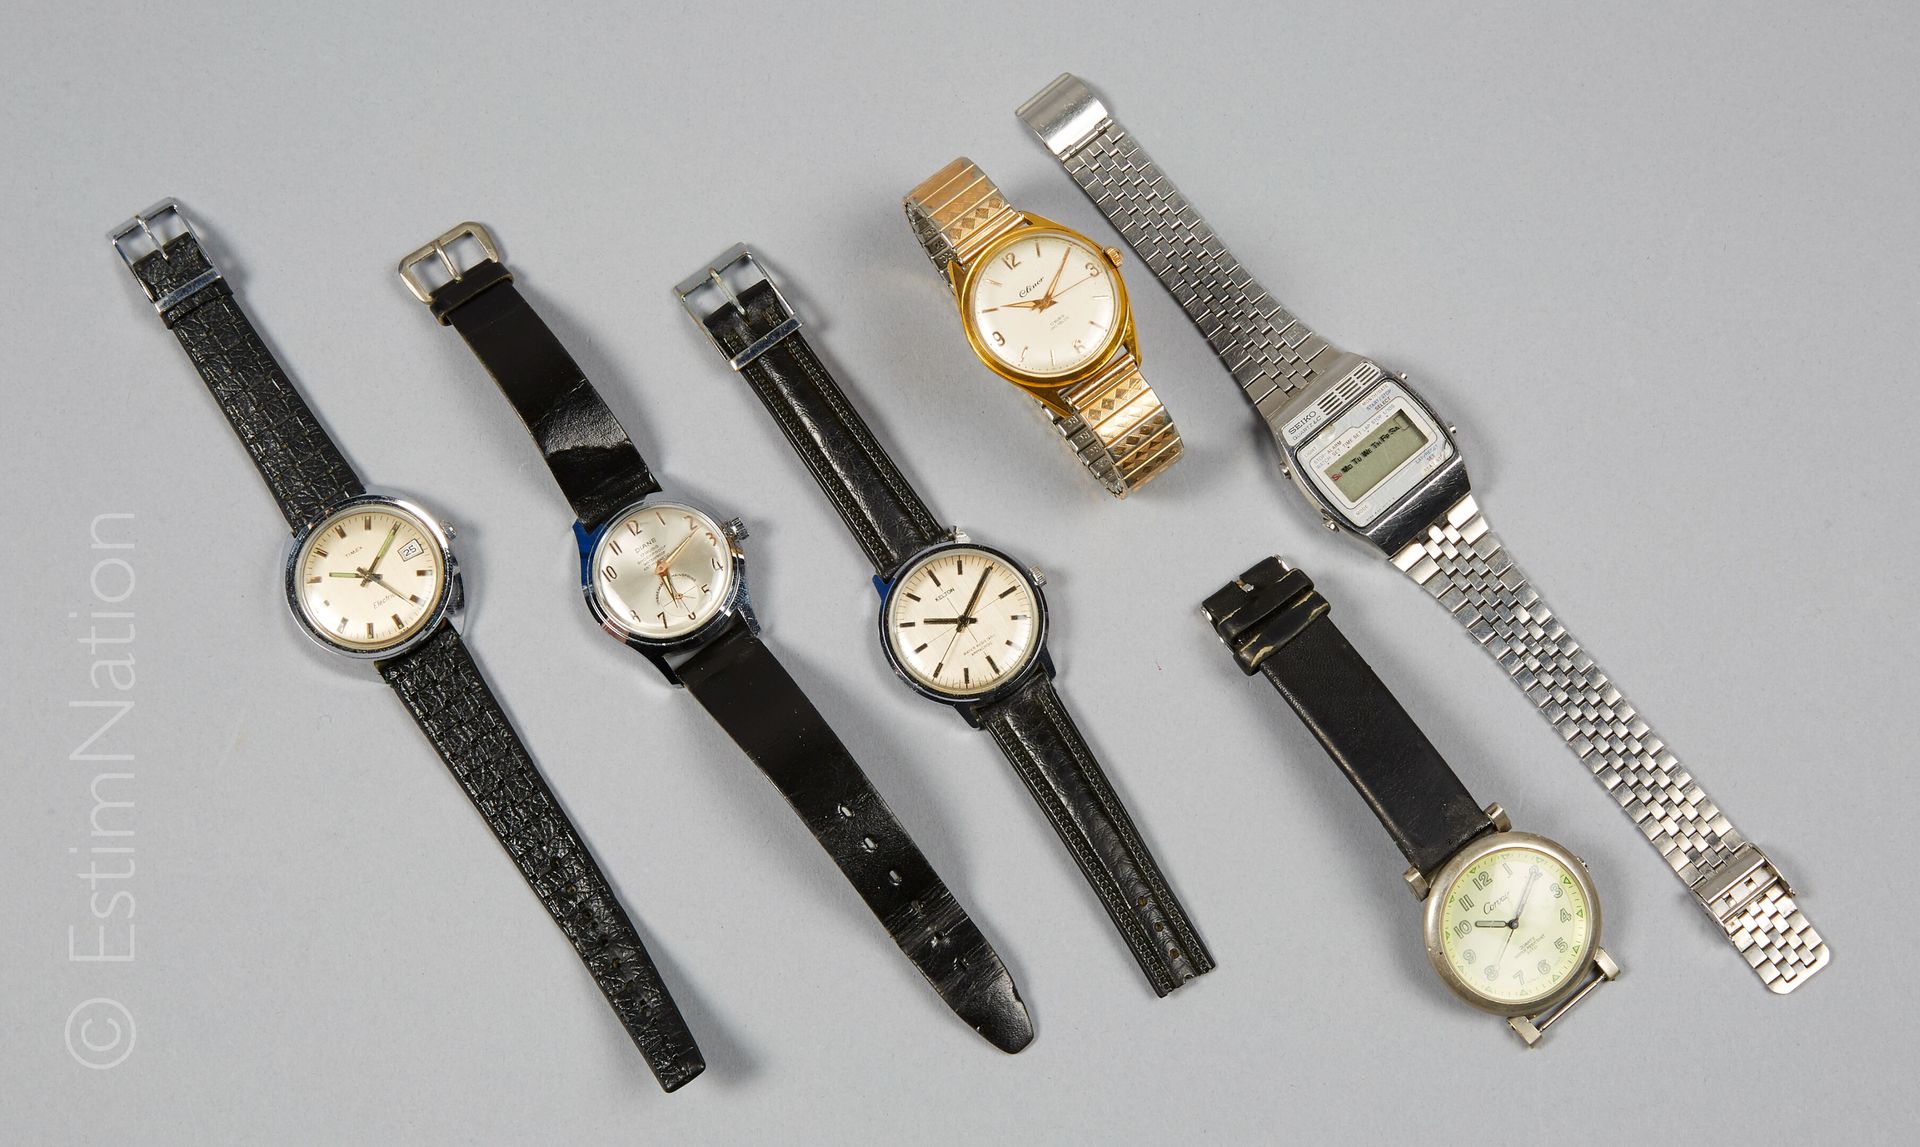 LOT DE MONTRES Lot of men's wrist watches including 

- 3 with mechanical moveme&hellip;